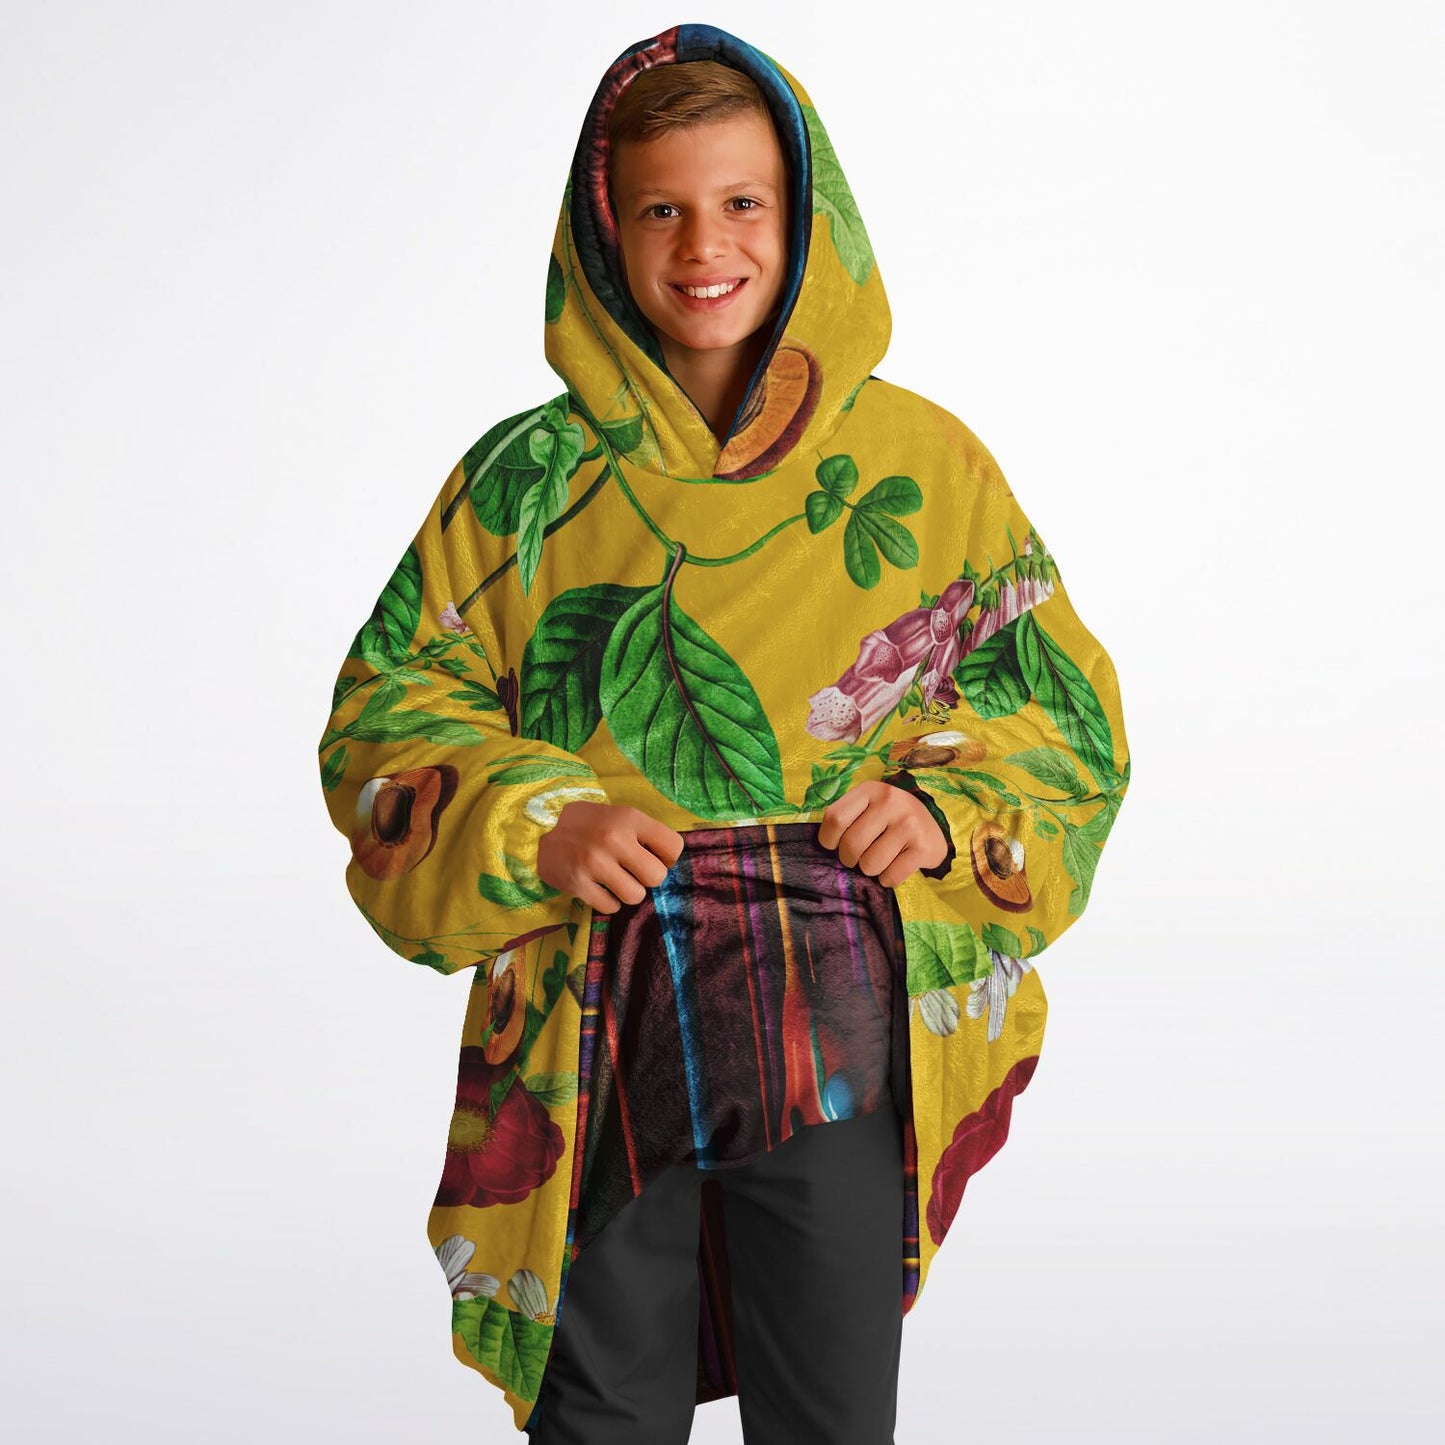 Youth Reversible Snug Hoodie, Drips Paint Design, Fruits Pattern Design